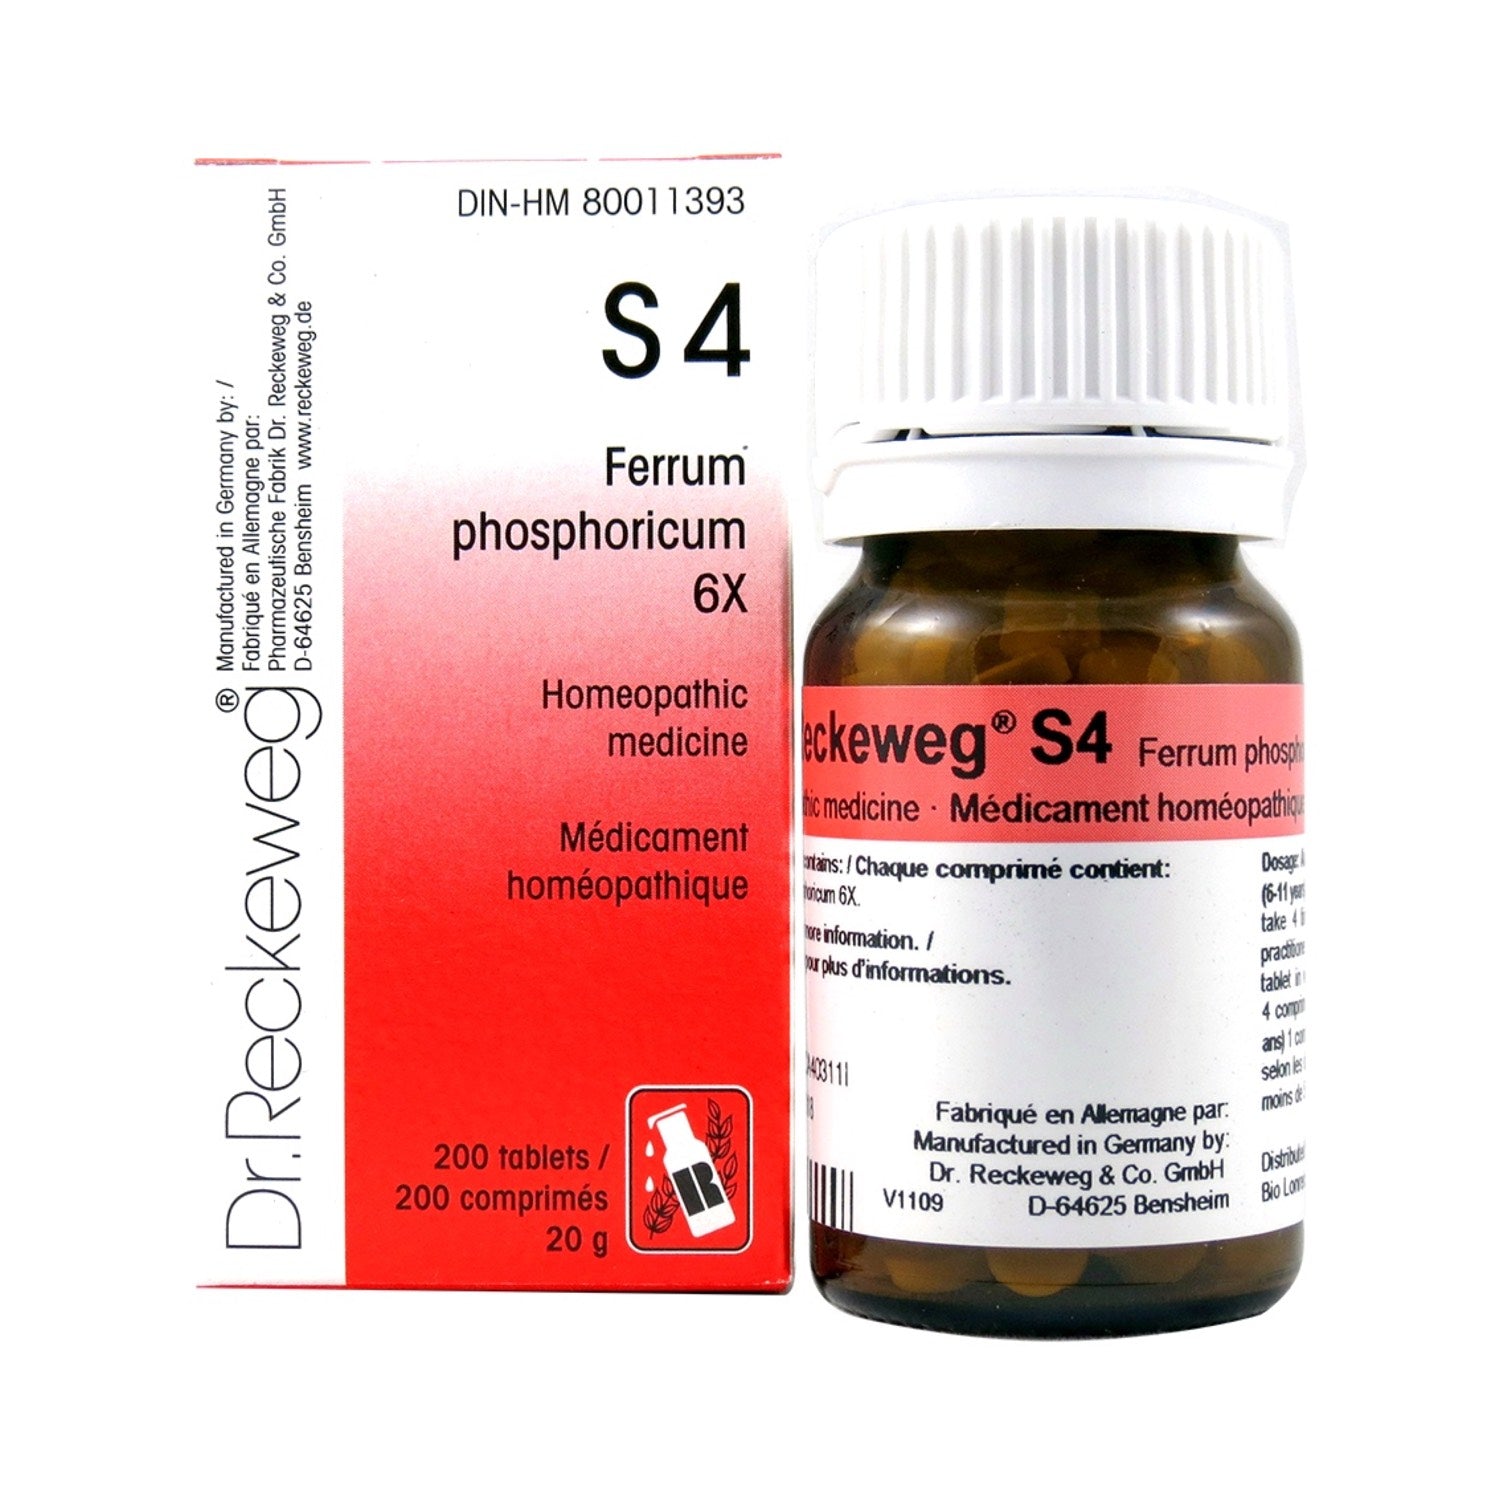 S4 Ferrum phosphoricum Homeopathic medicine Schuessler salt  6X and 200 tablets (20 g) - iwellnessbox